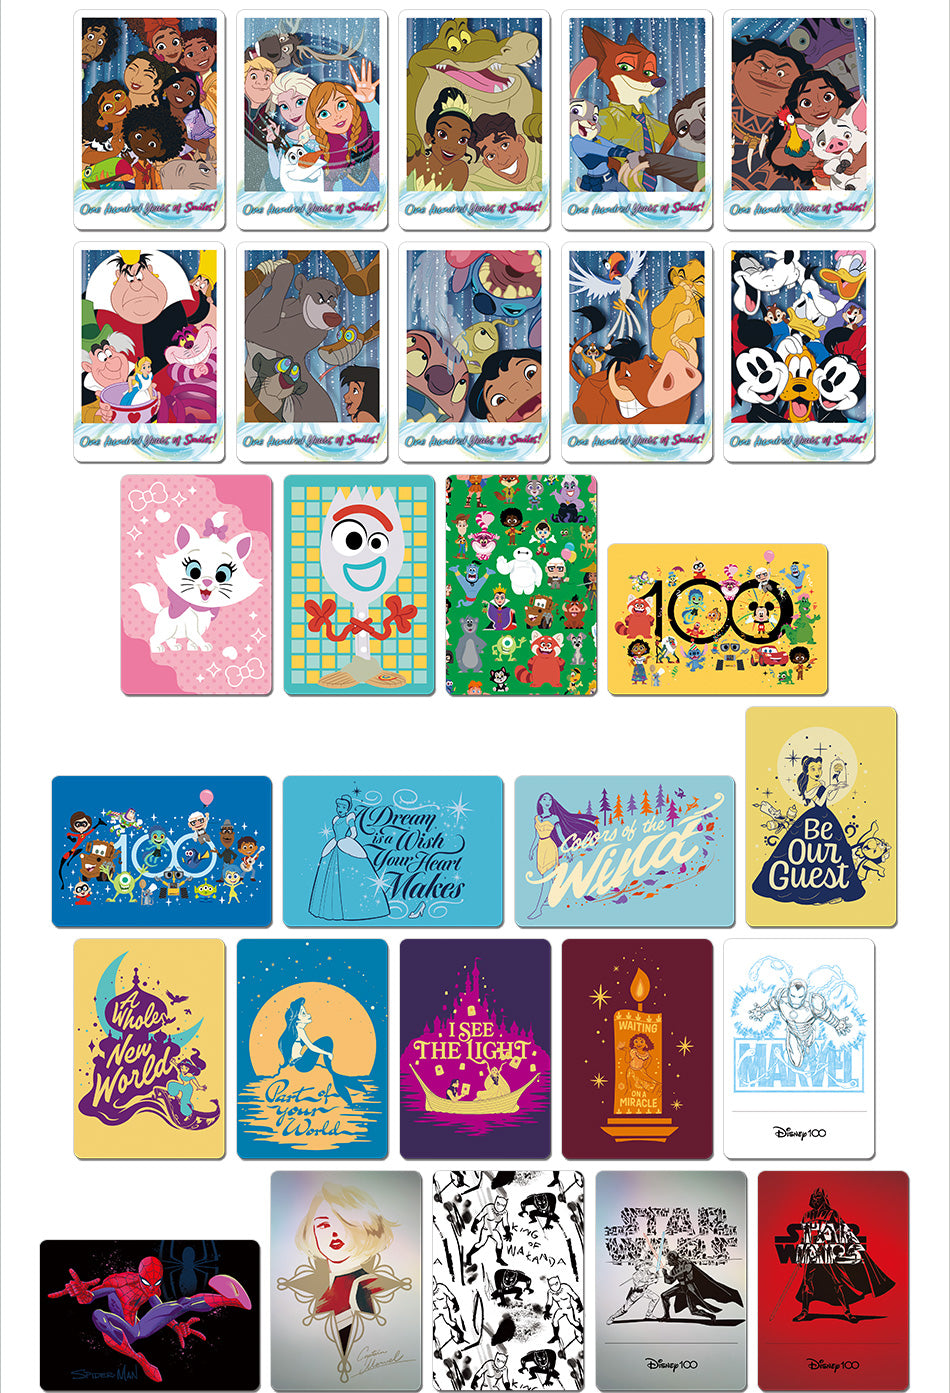 Pre-Order Disney 100 Wonder Card Collection - Bandai